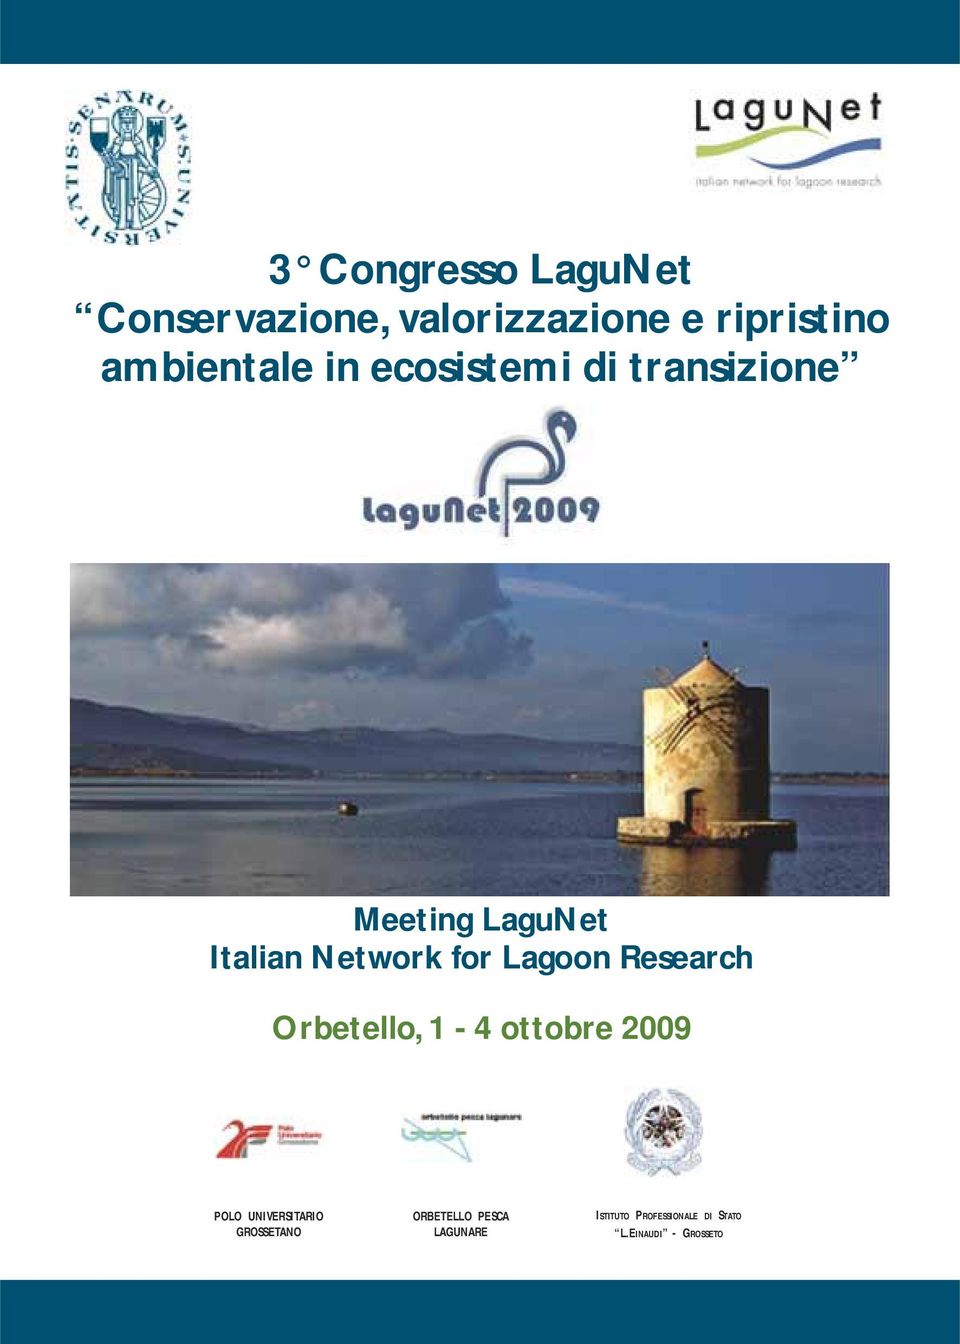 for Lagoon Research Orbetello, 1-4 ottobre 2009 POLO UNIVERSITARIO